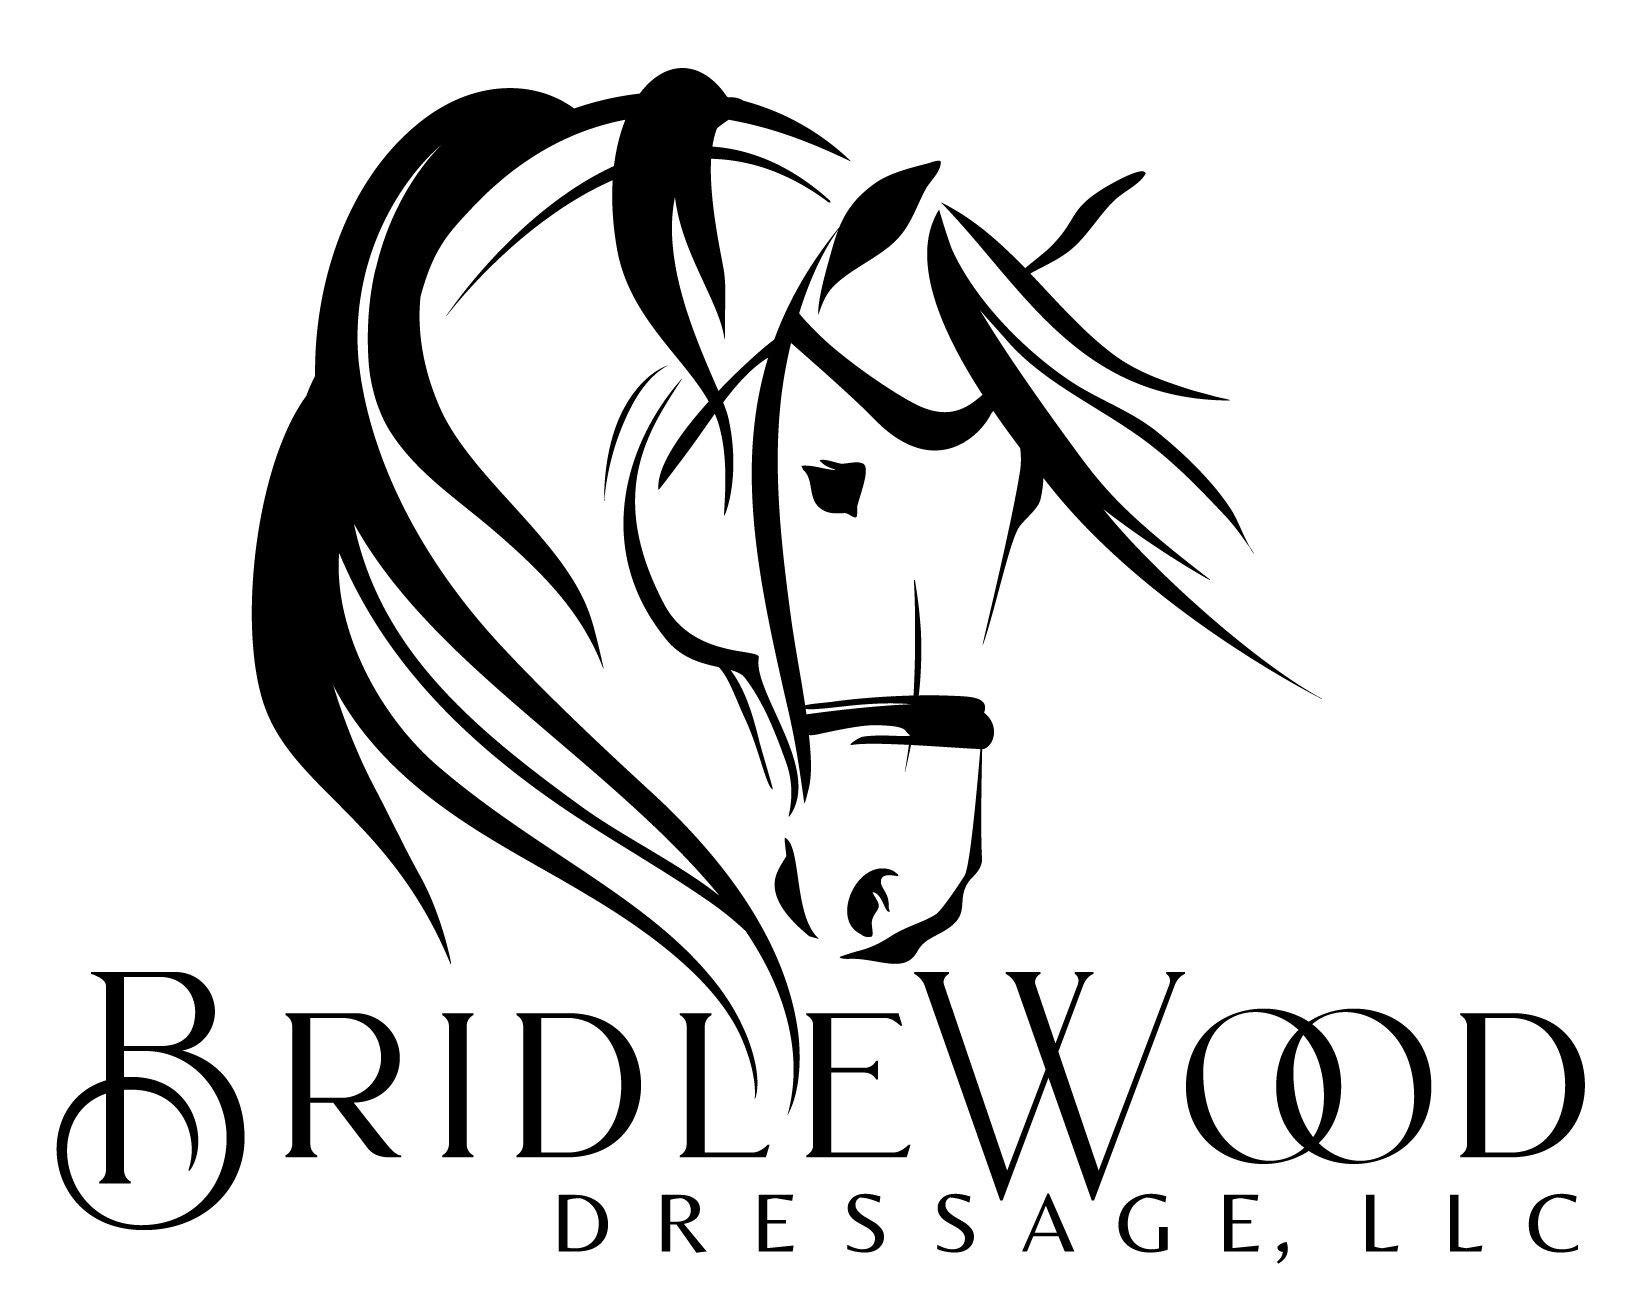 BRIDLEWOOD DRESSAGE